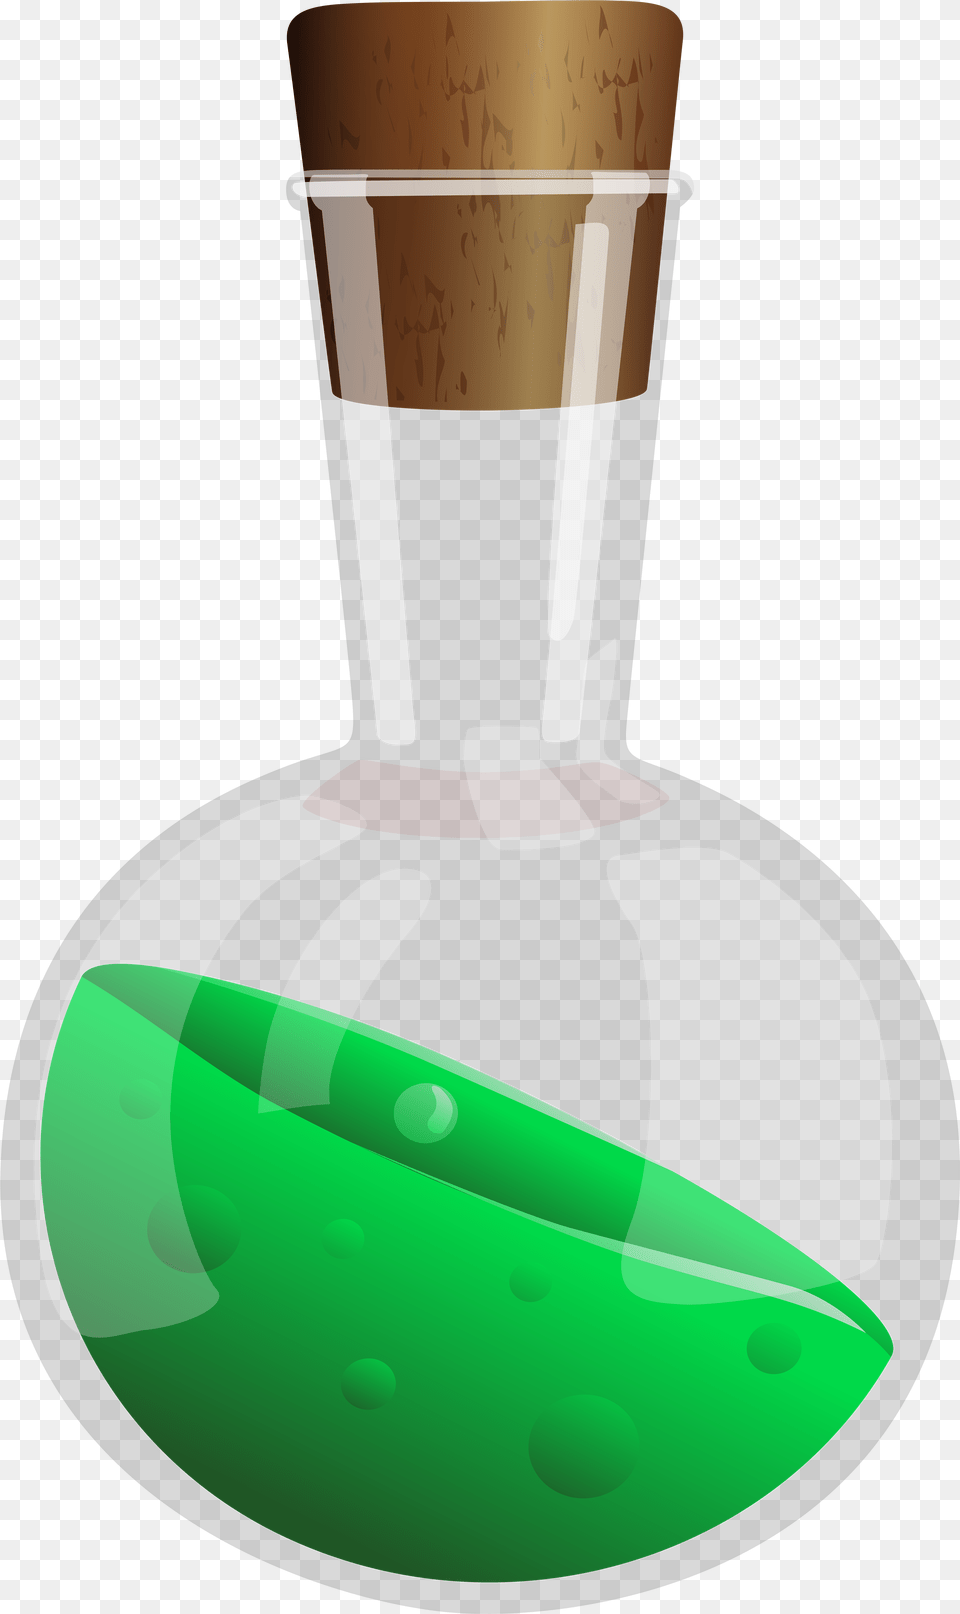 Potion Poison Green Clipart Gallery Yopriceville Purple Potion, Smoke Pipe, Cork, Bottle, Shaker Png